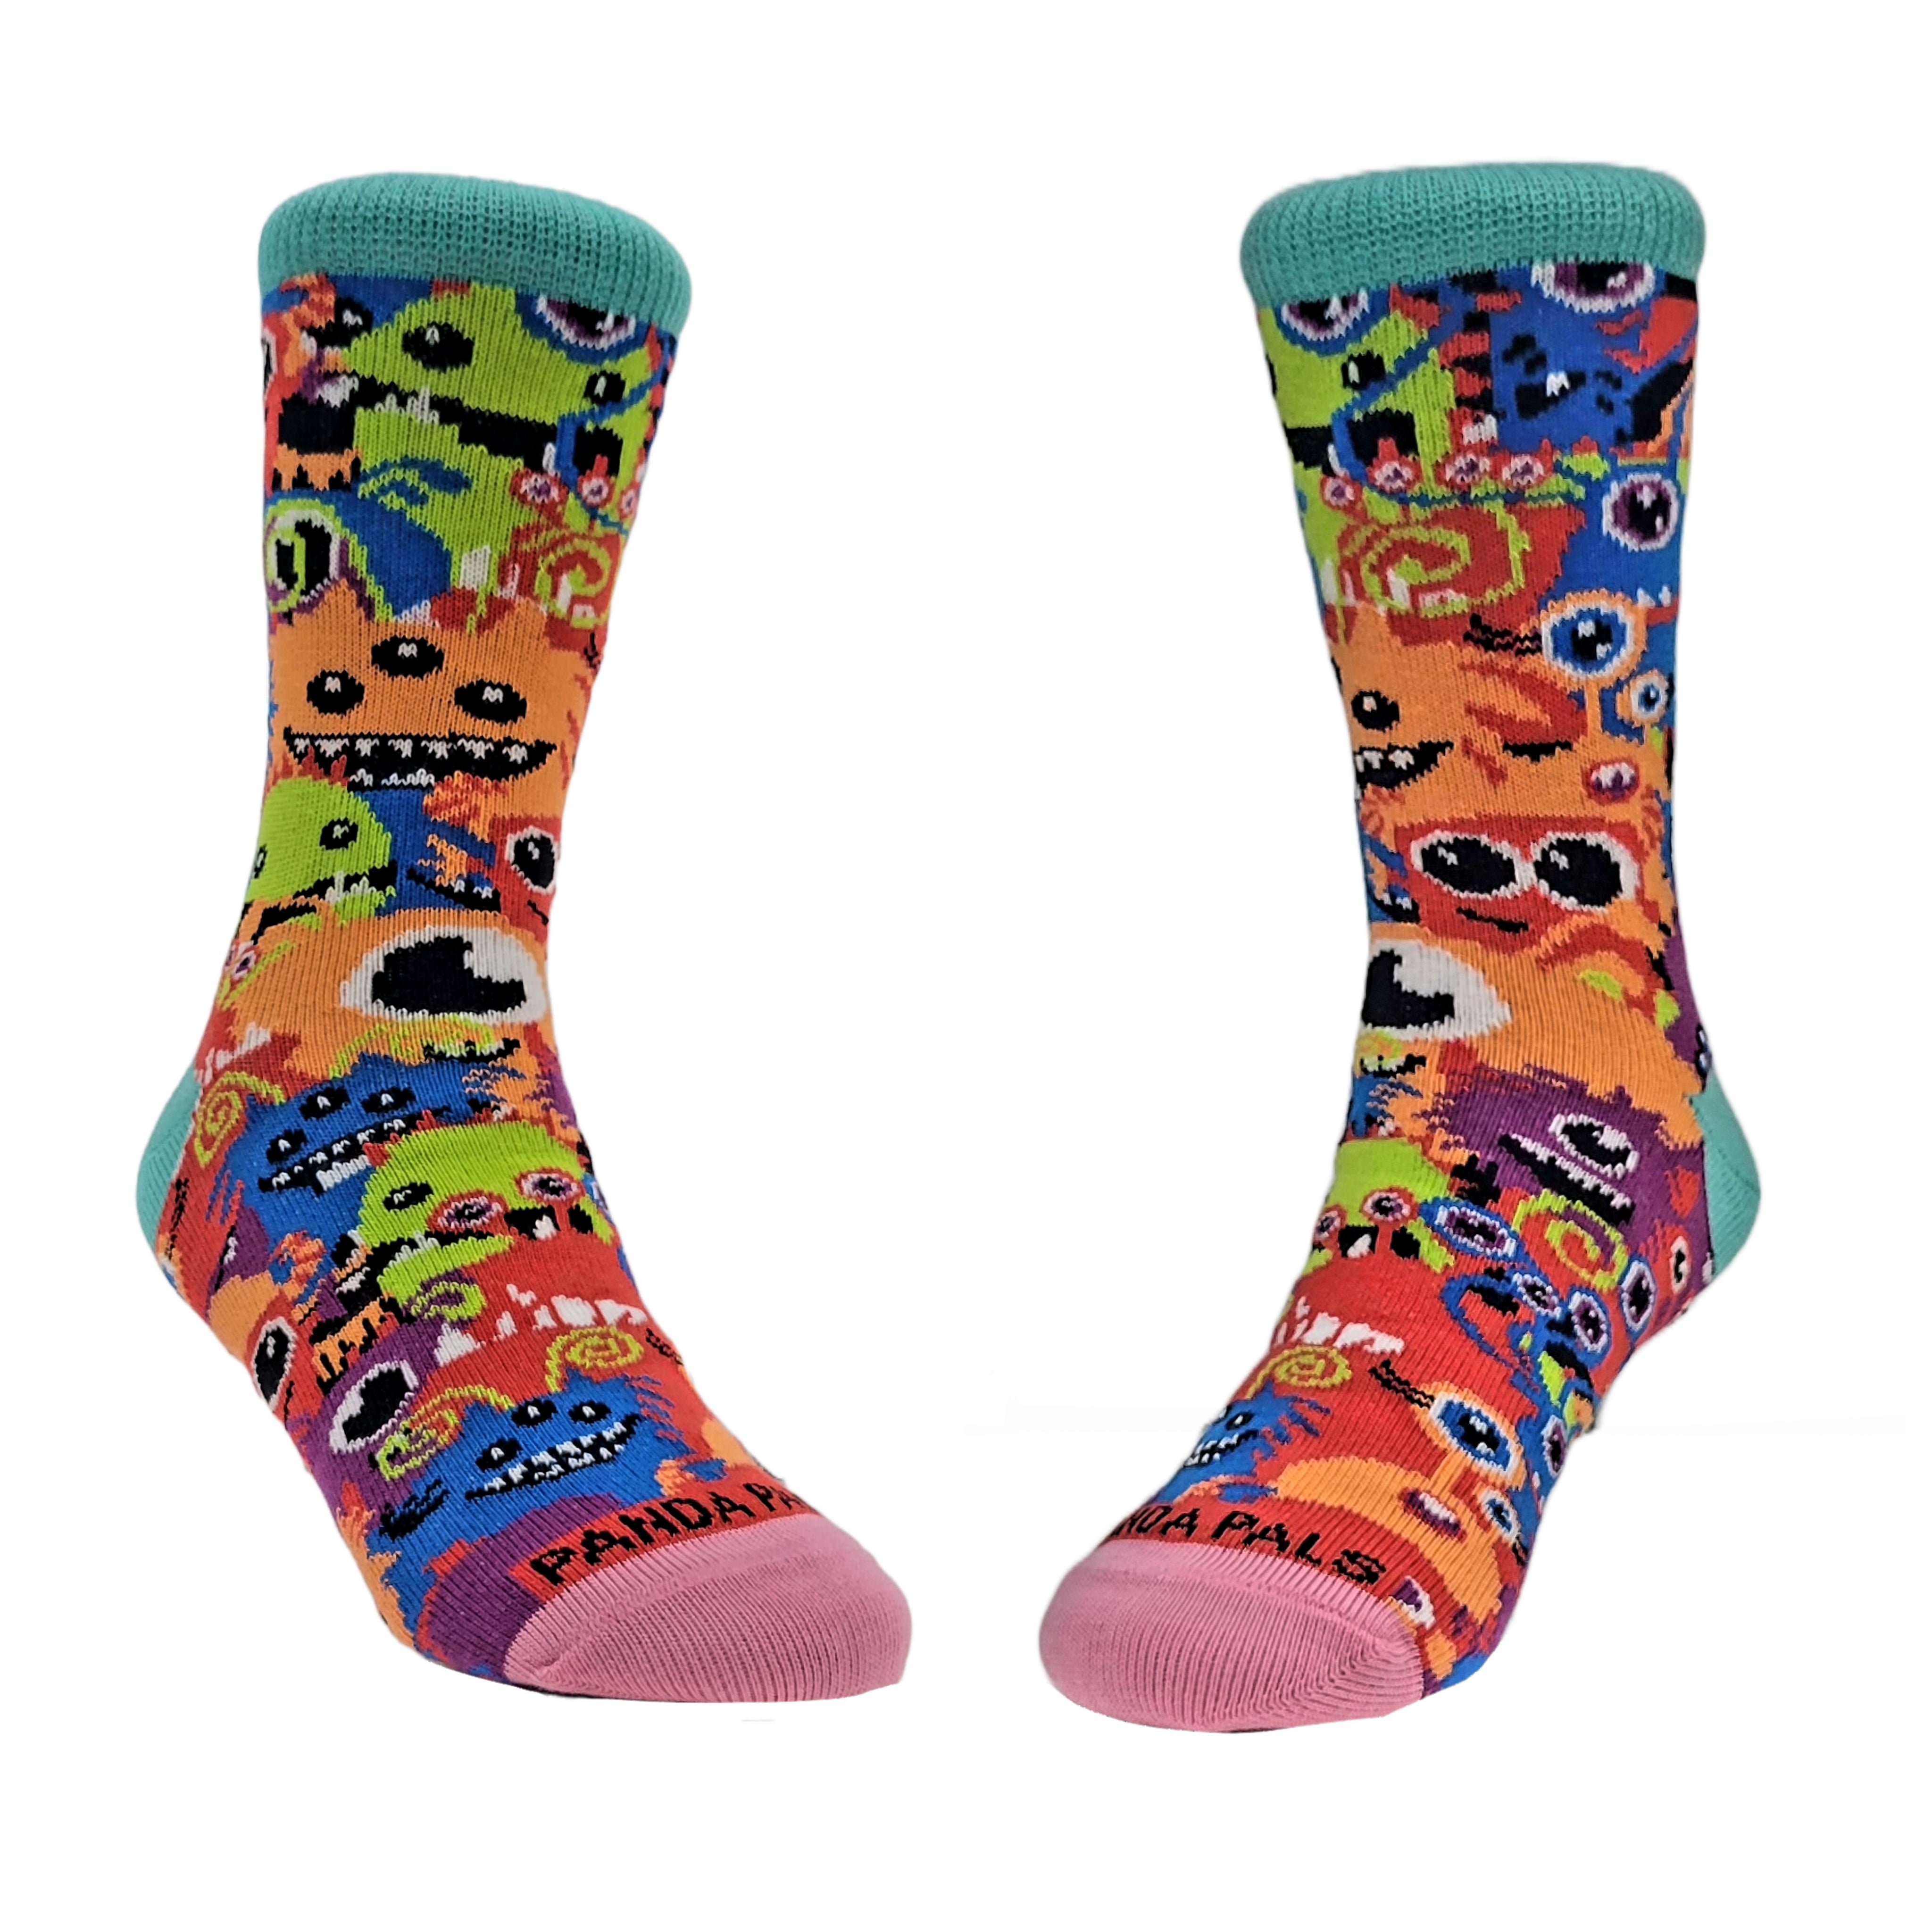 Monster Face Pattern Socks from the Sock Panda (Ages 3-7)